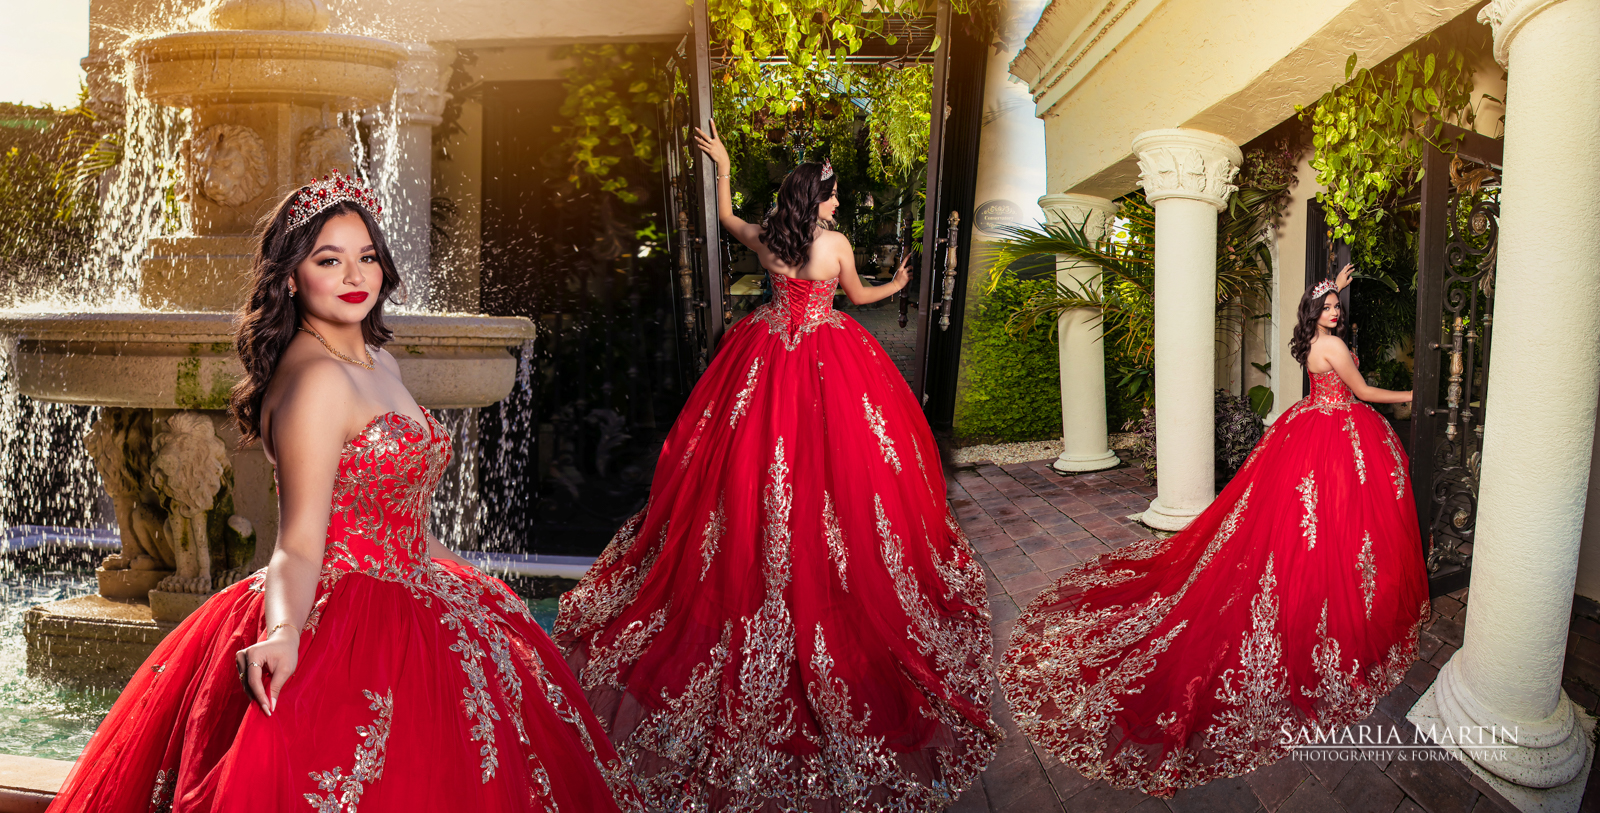 Villa Toscana Quinceanera, custom photoshoot quinceanera, Red Glam dresses, Samaria Martin best photographer, quinceaneras photoshoot in Miami (1)